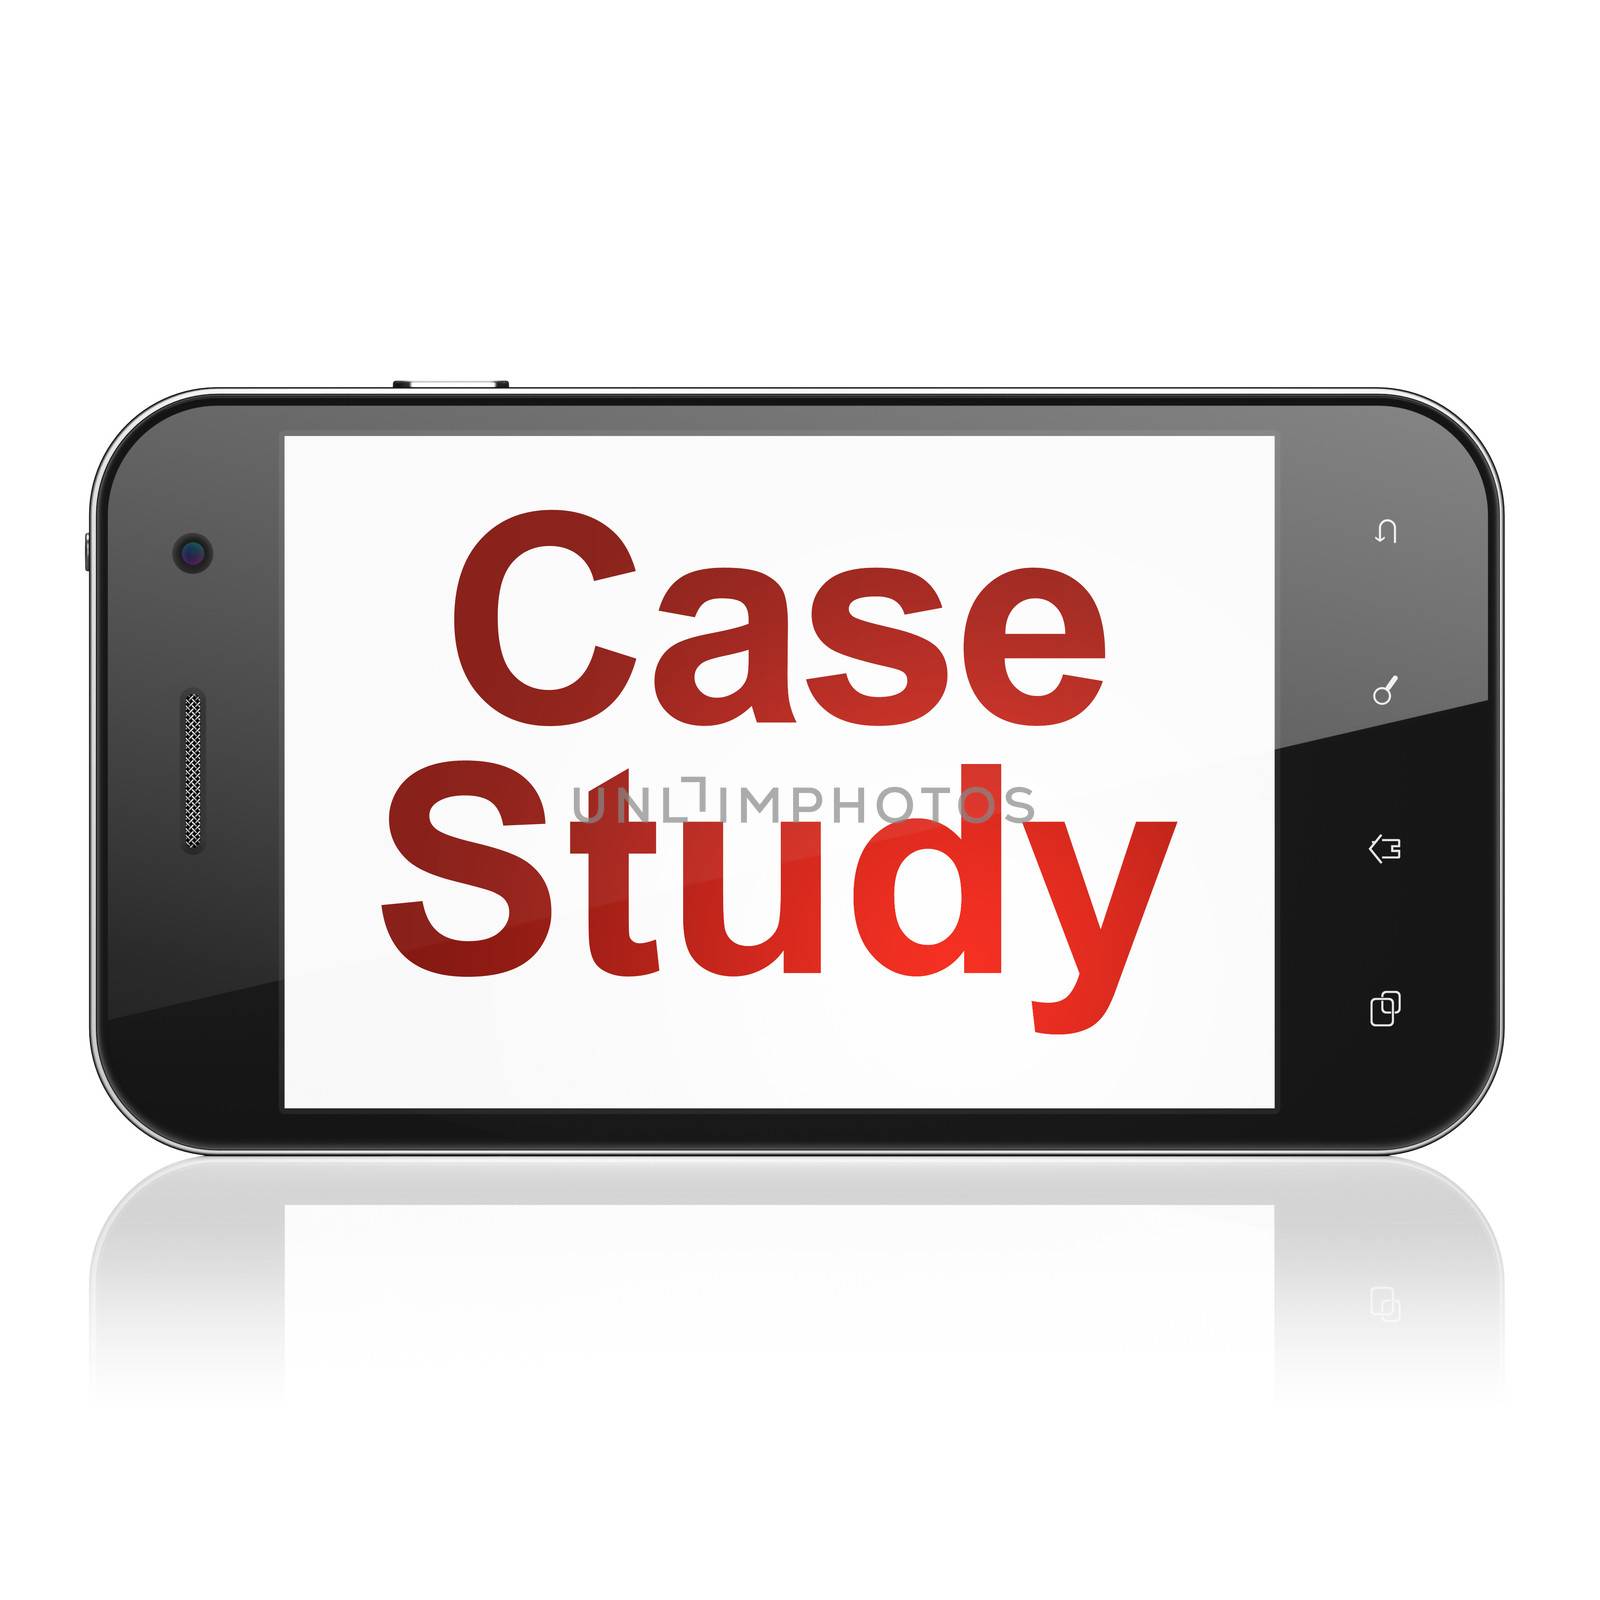 Education concept: Case Study on smartphone by maxkabakov